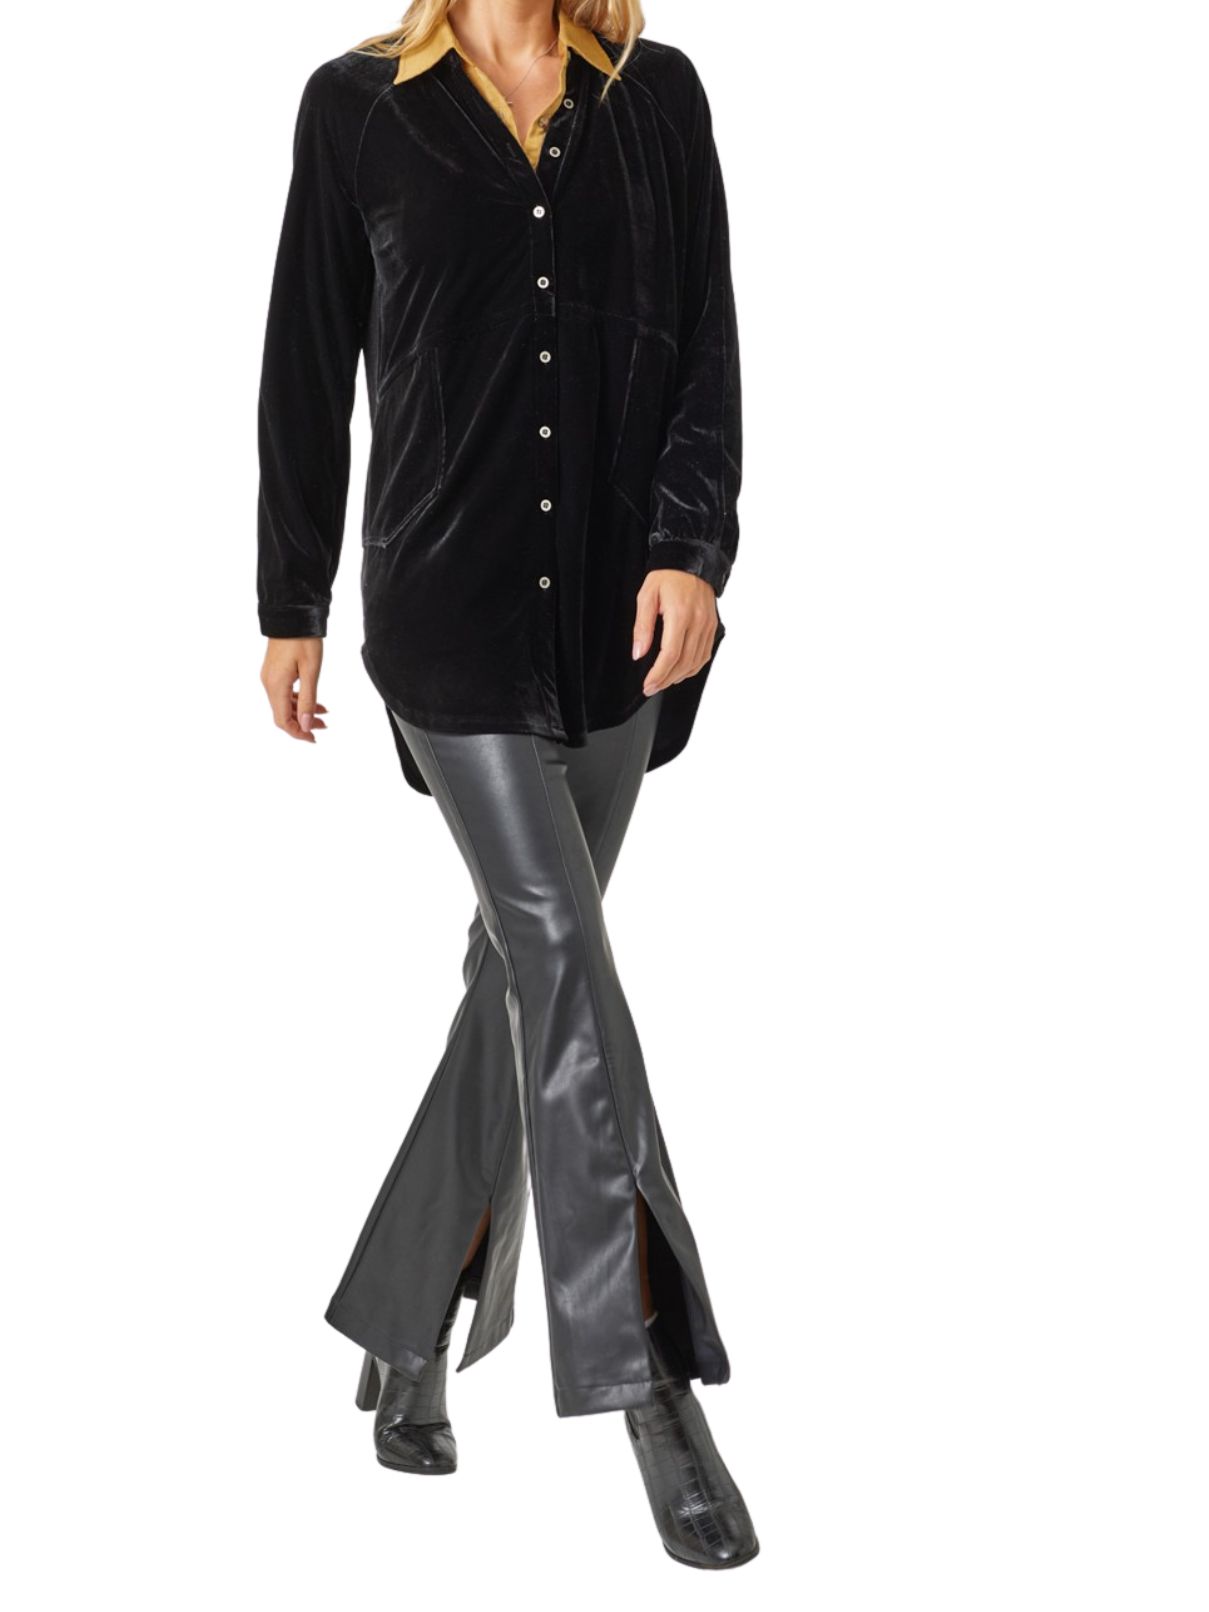 L/S Velvet Shirt in Black | Cotton Island Women's Clothing Boutique